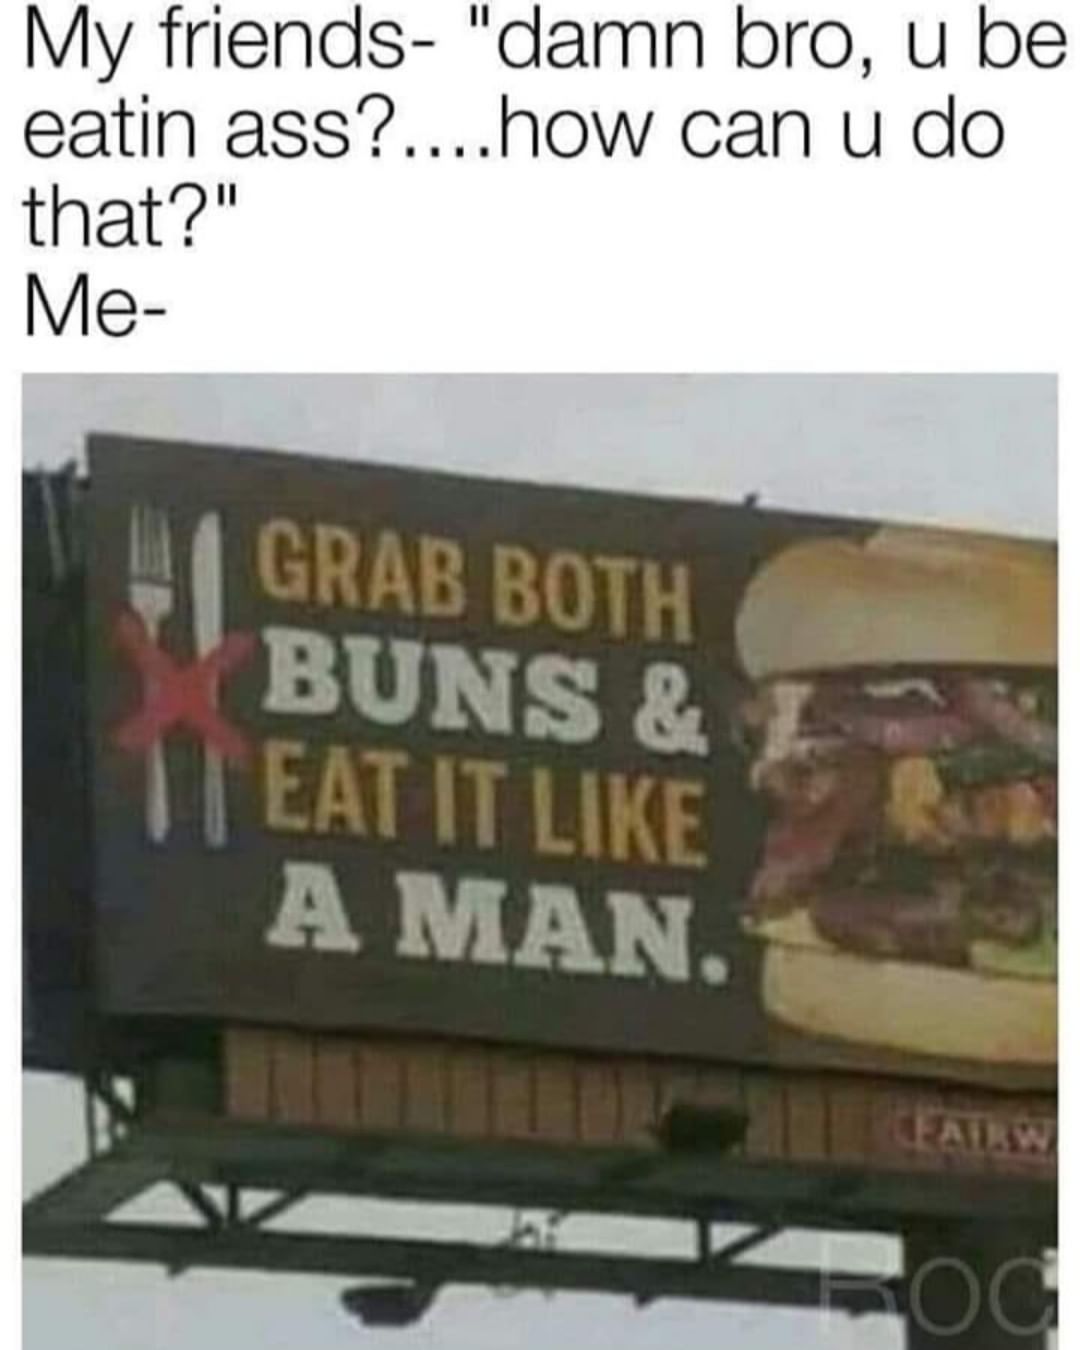 billboard - My friends "damn bro, u be eatin ass?....how can u do that?" Me Grab Both Buns & || Eat It A Man.